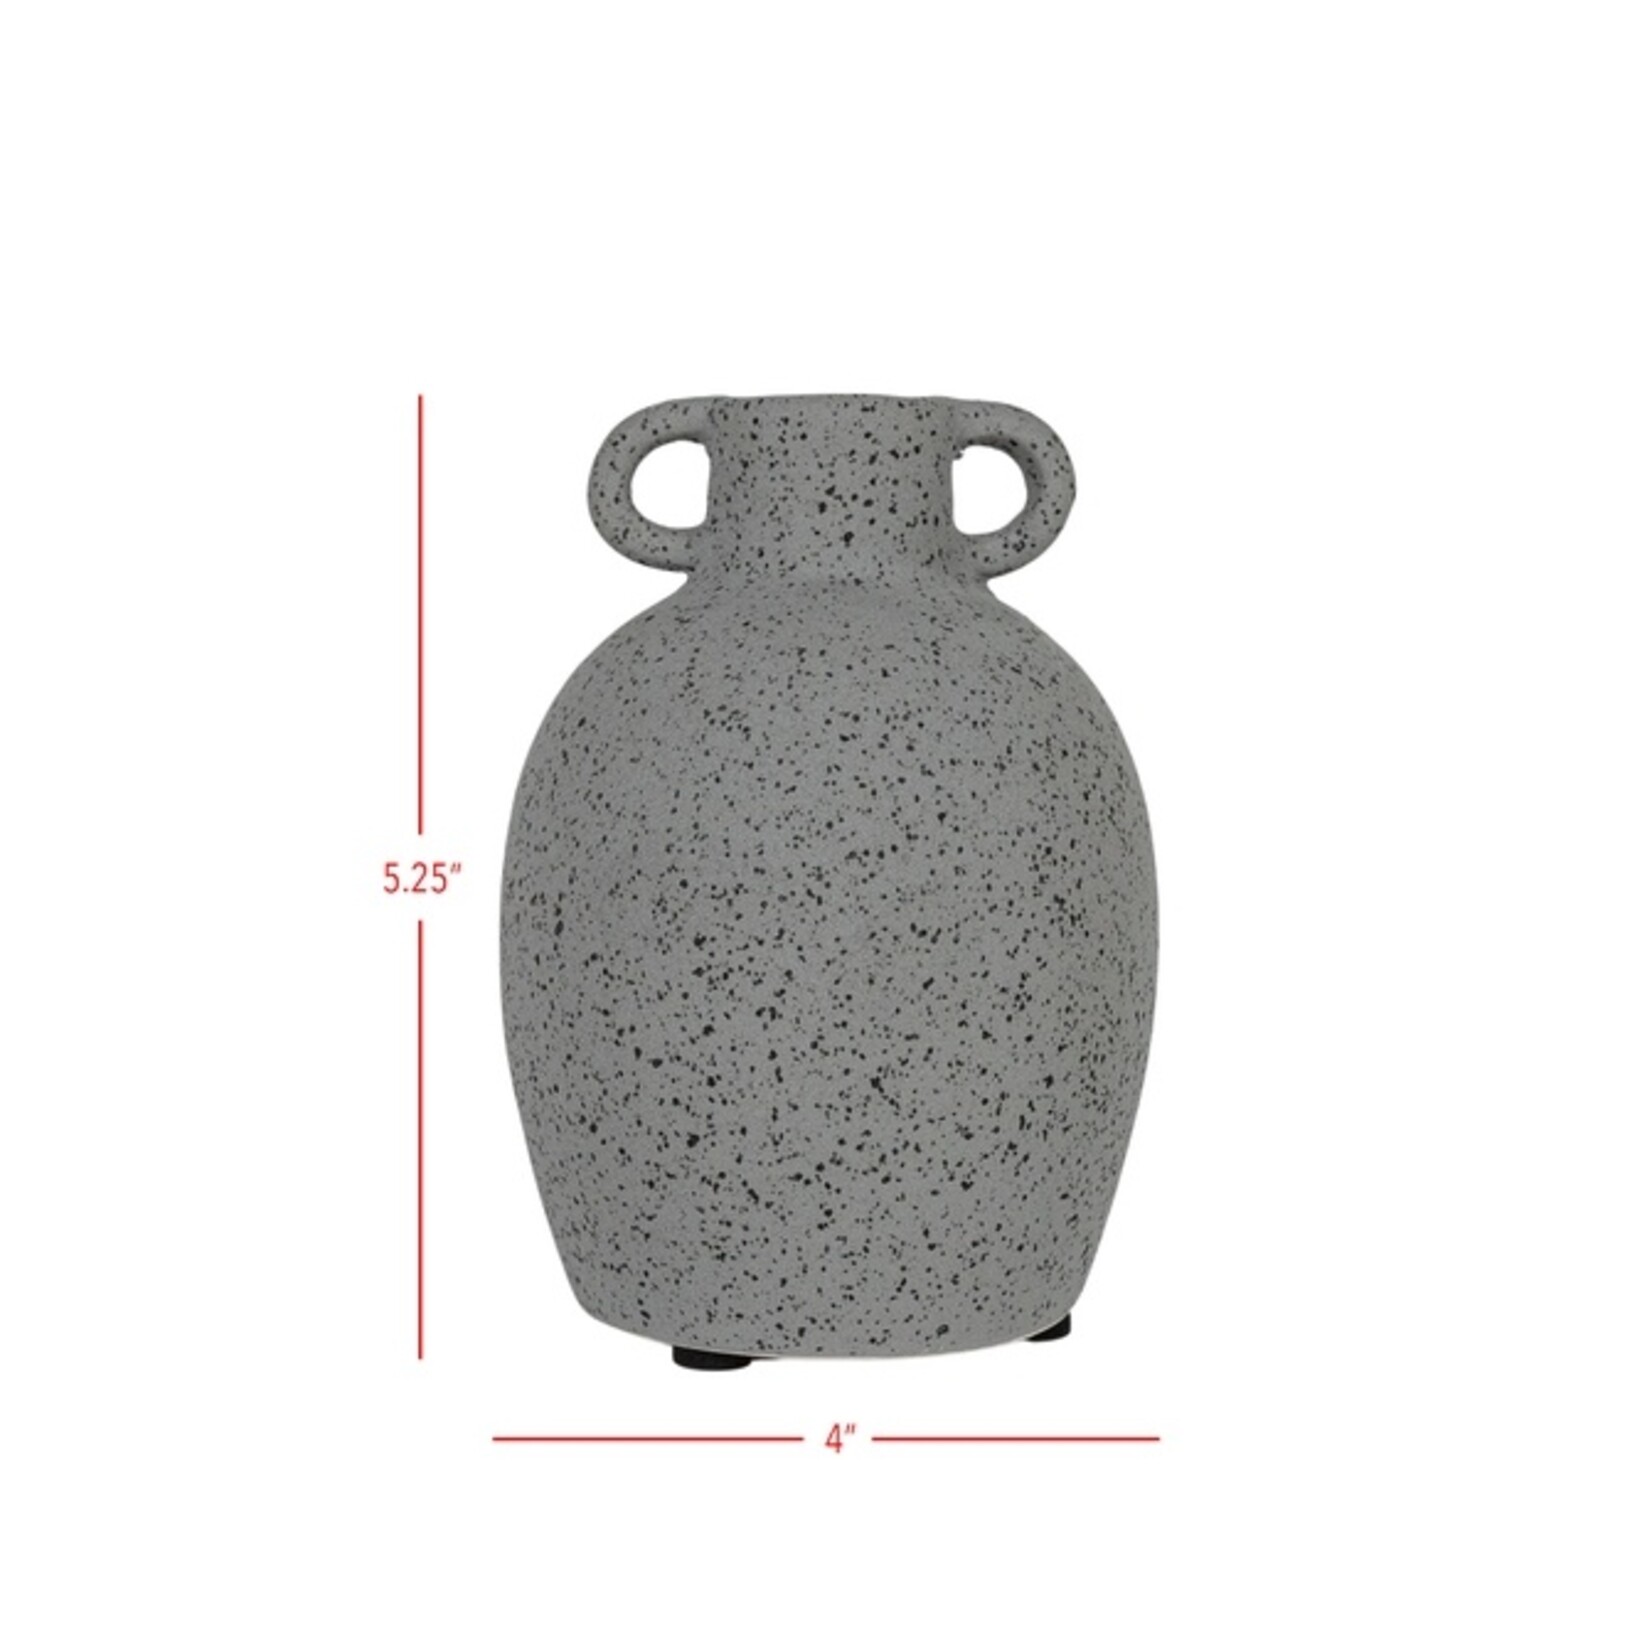 Speckled Stoneware Vase